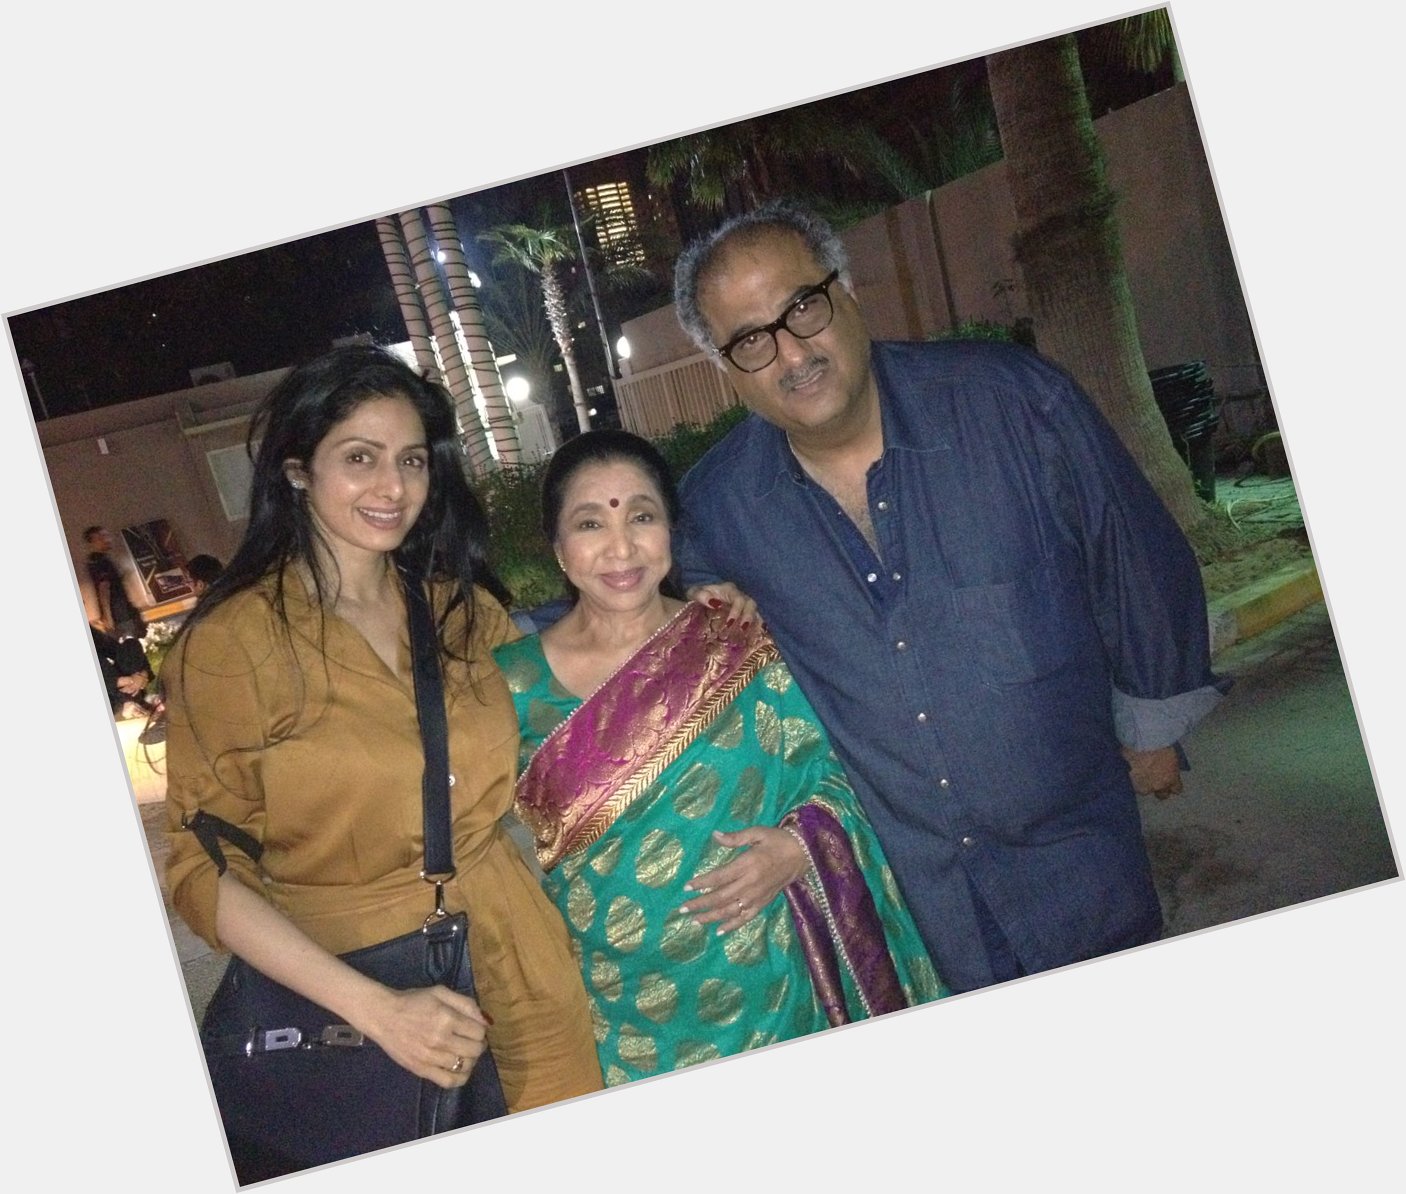 A happy birthday to the ever-shining Sridevi Kapoor from Asha\s!  